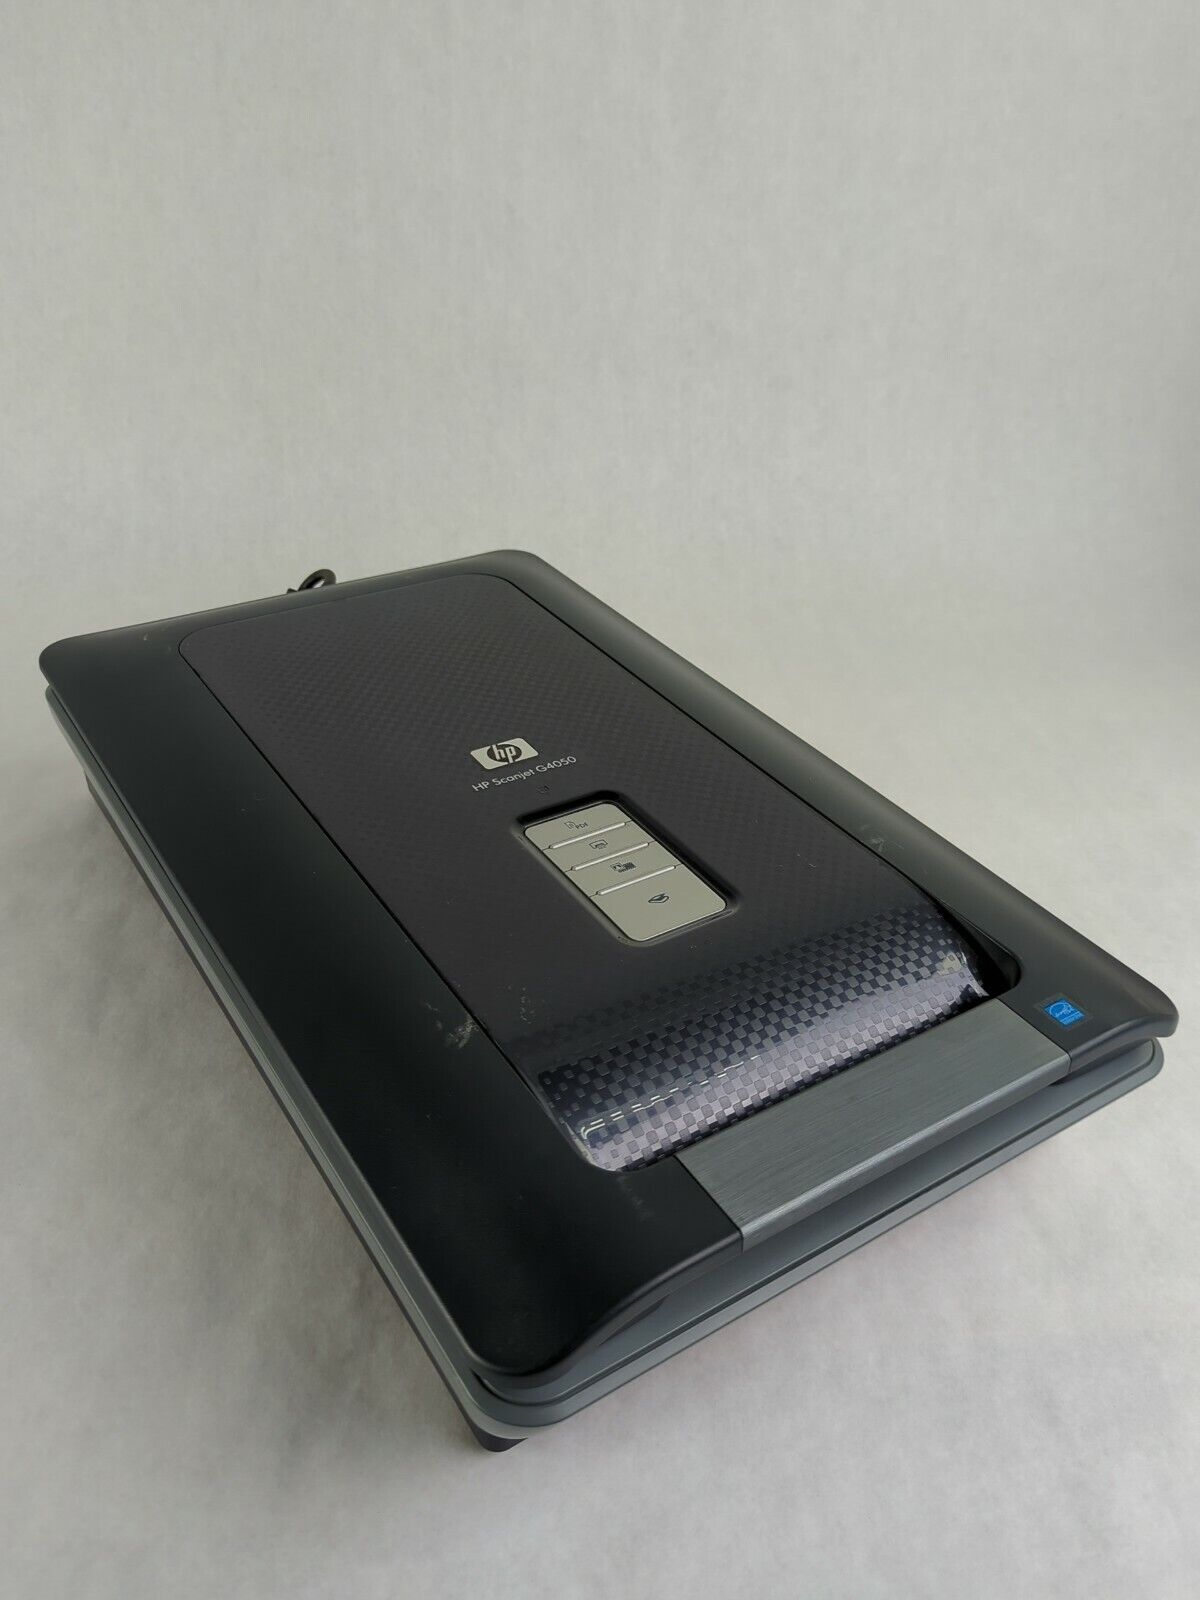 HP ScanJet G4050 Flatbed Photo Scanner - No Power